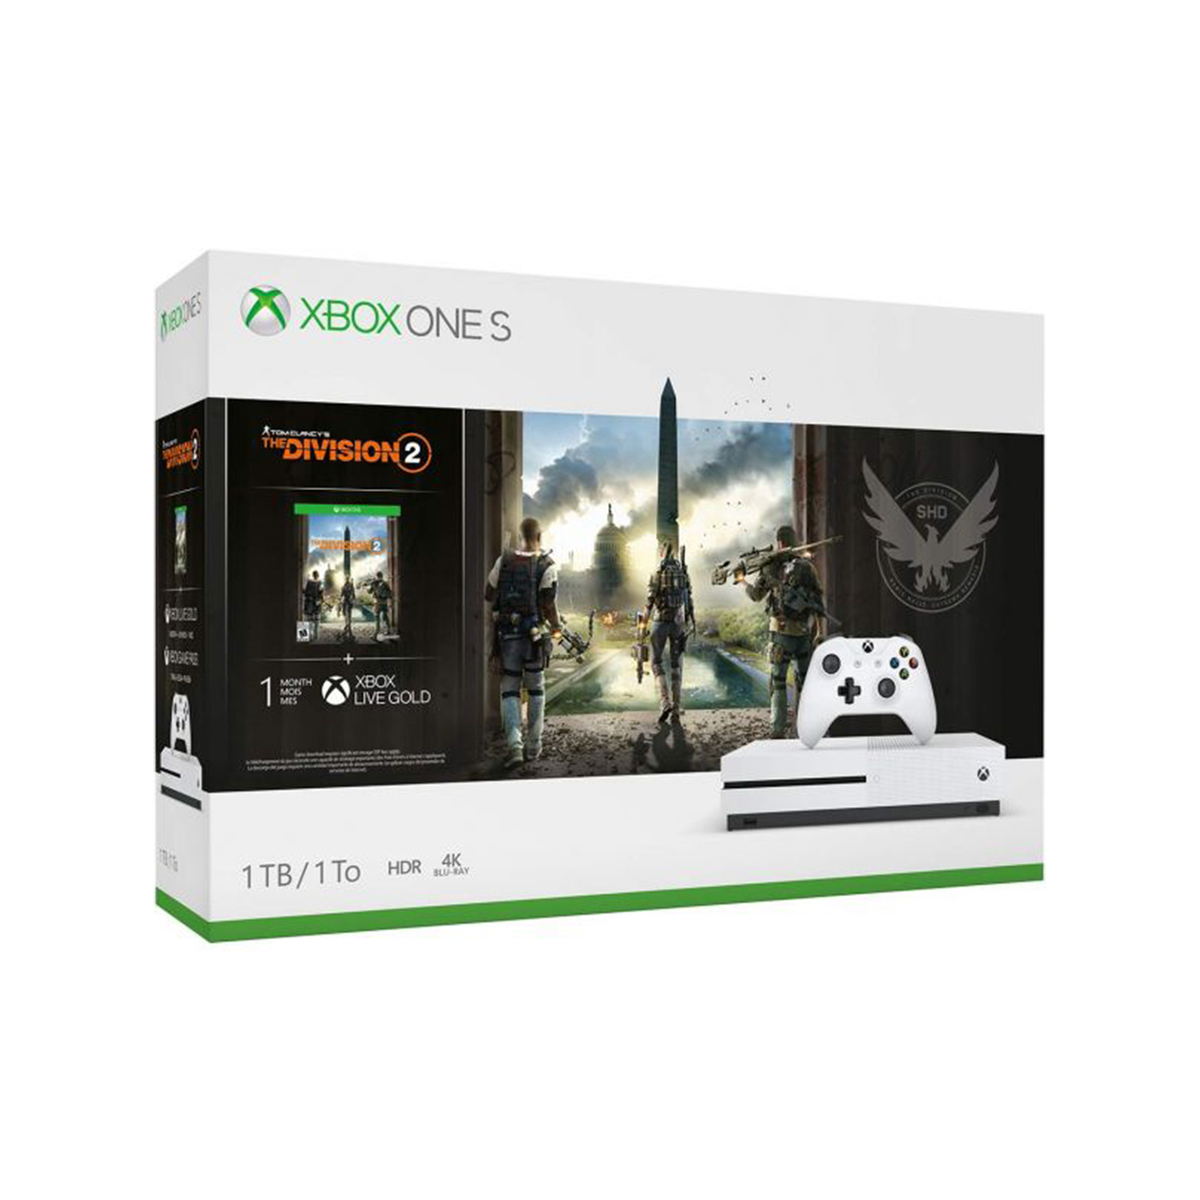 Xbox One S 1TB Console White + Controller